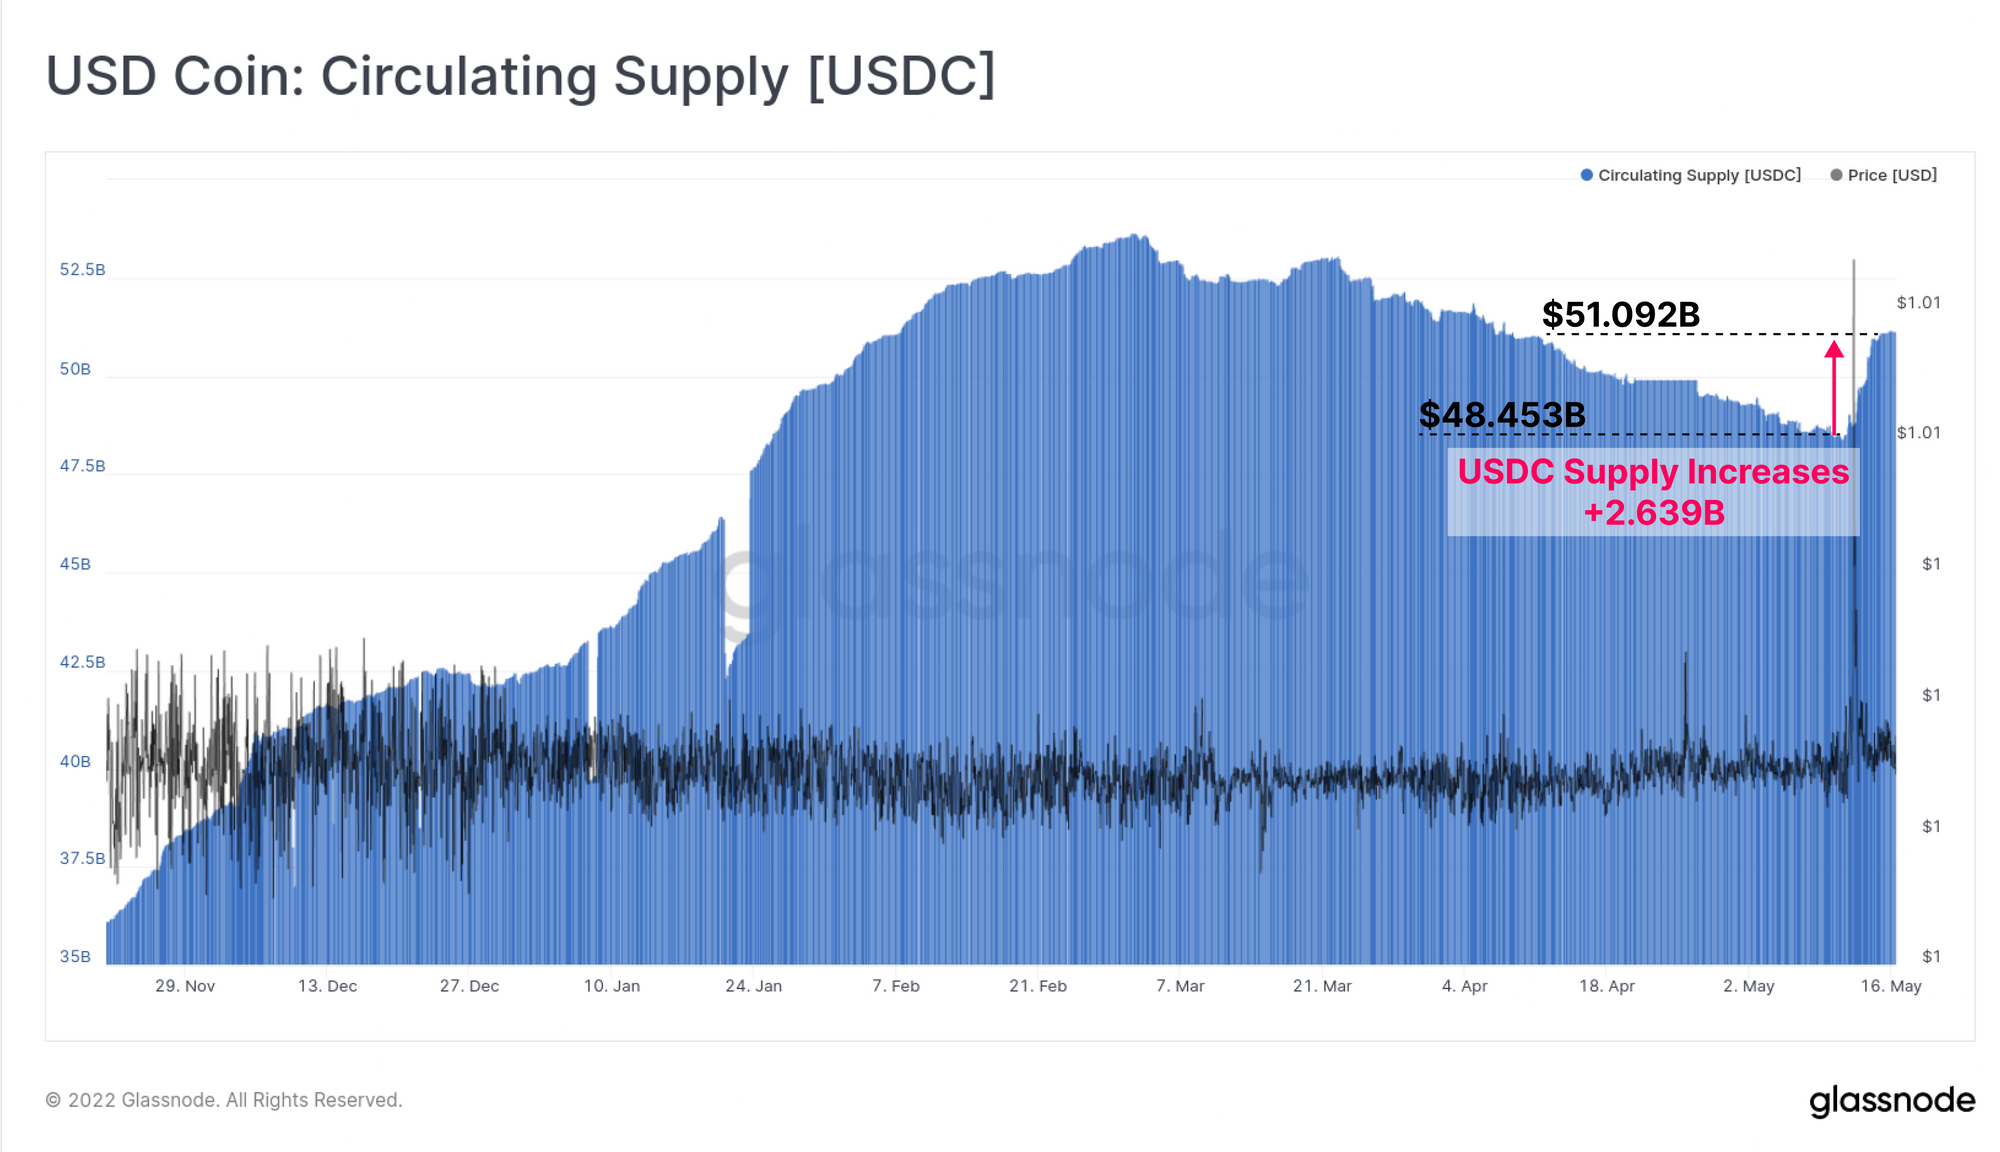 USD Coin: Circlulating Supply (USDC)